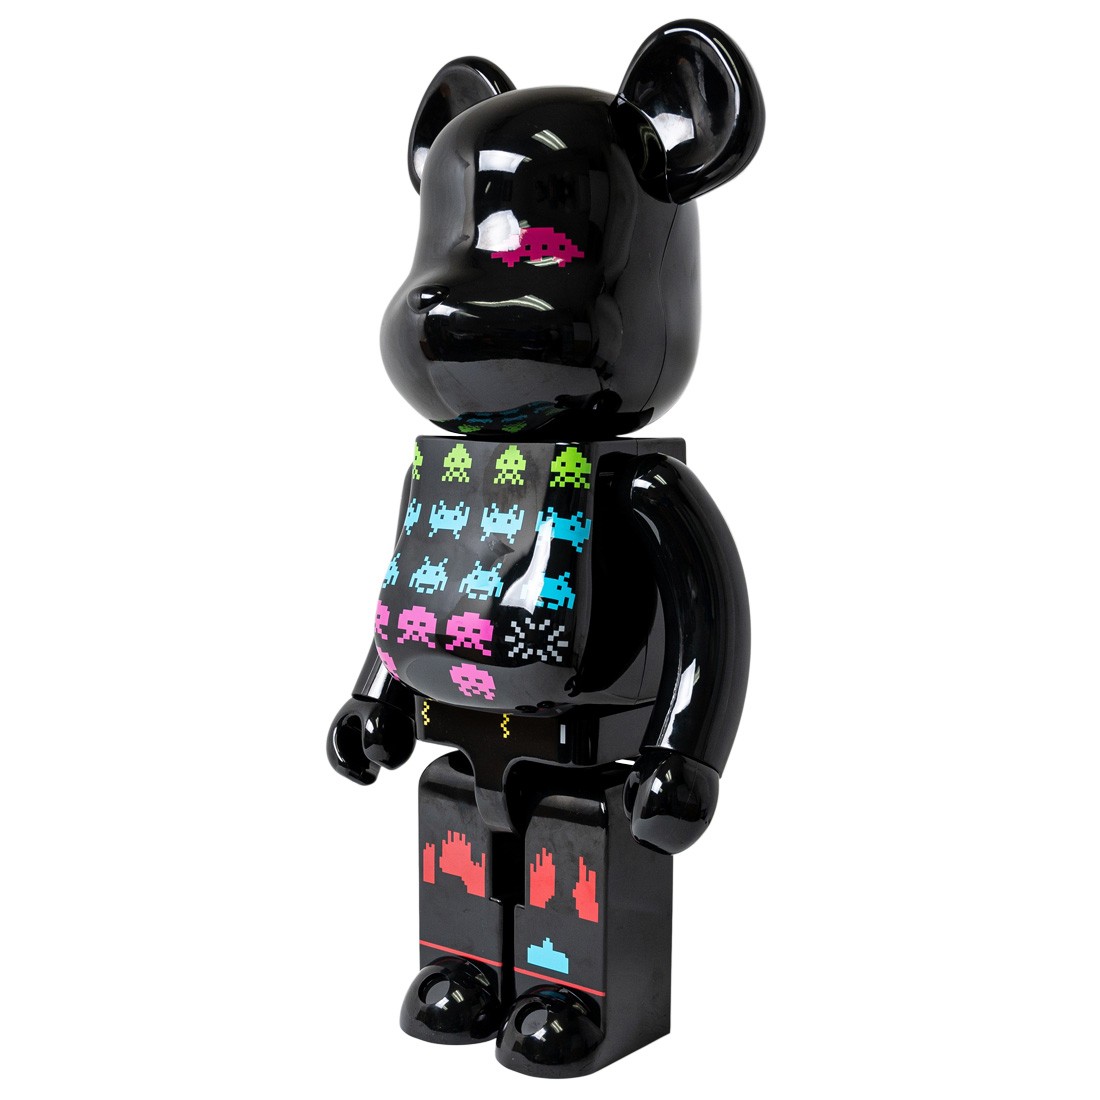 Medicom Space Invaders 1000% Bearbrick Figure (black)